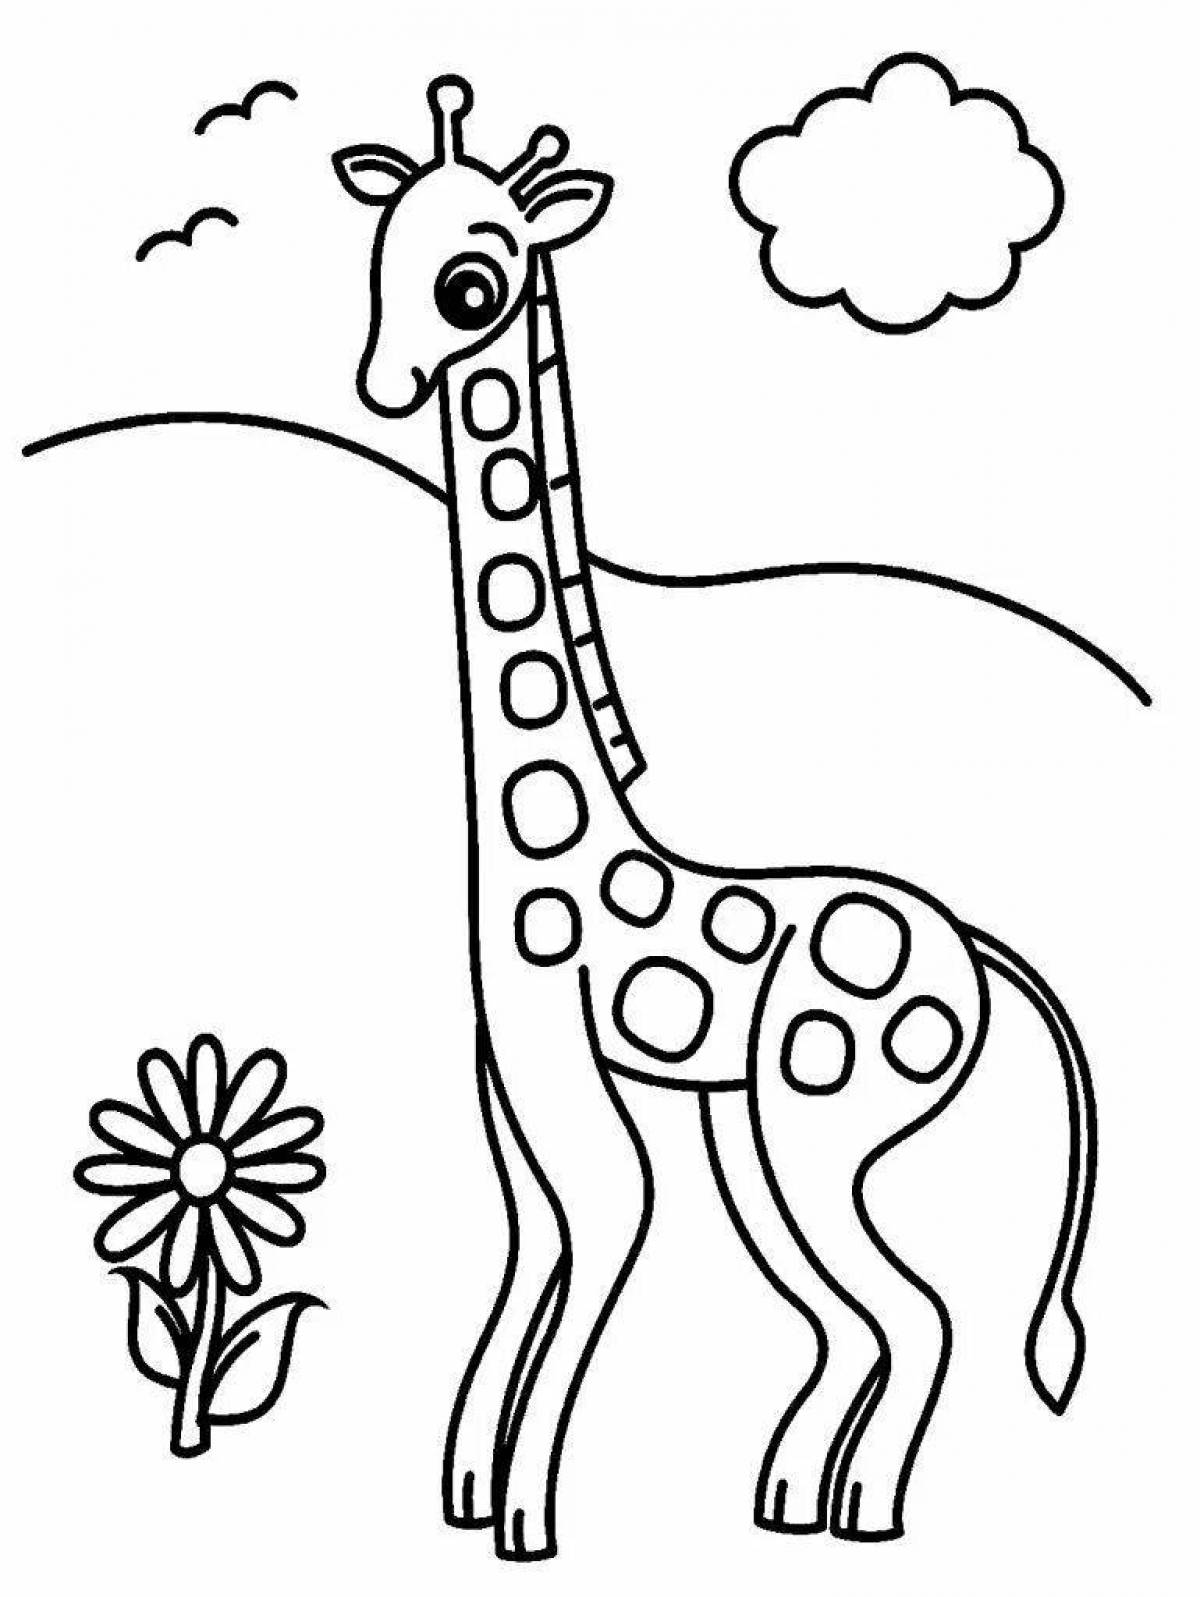 Live giraffe coloring page